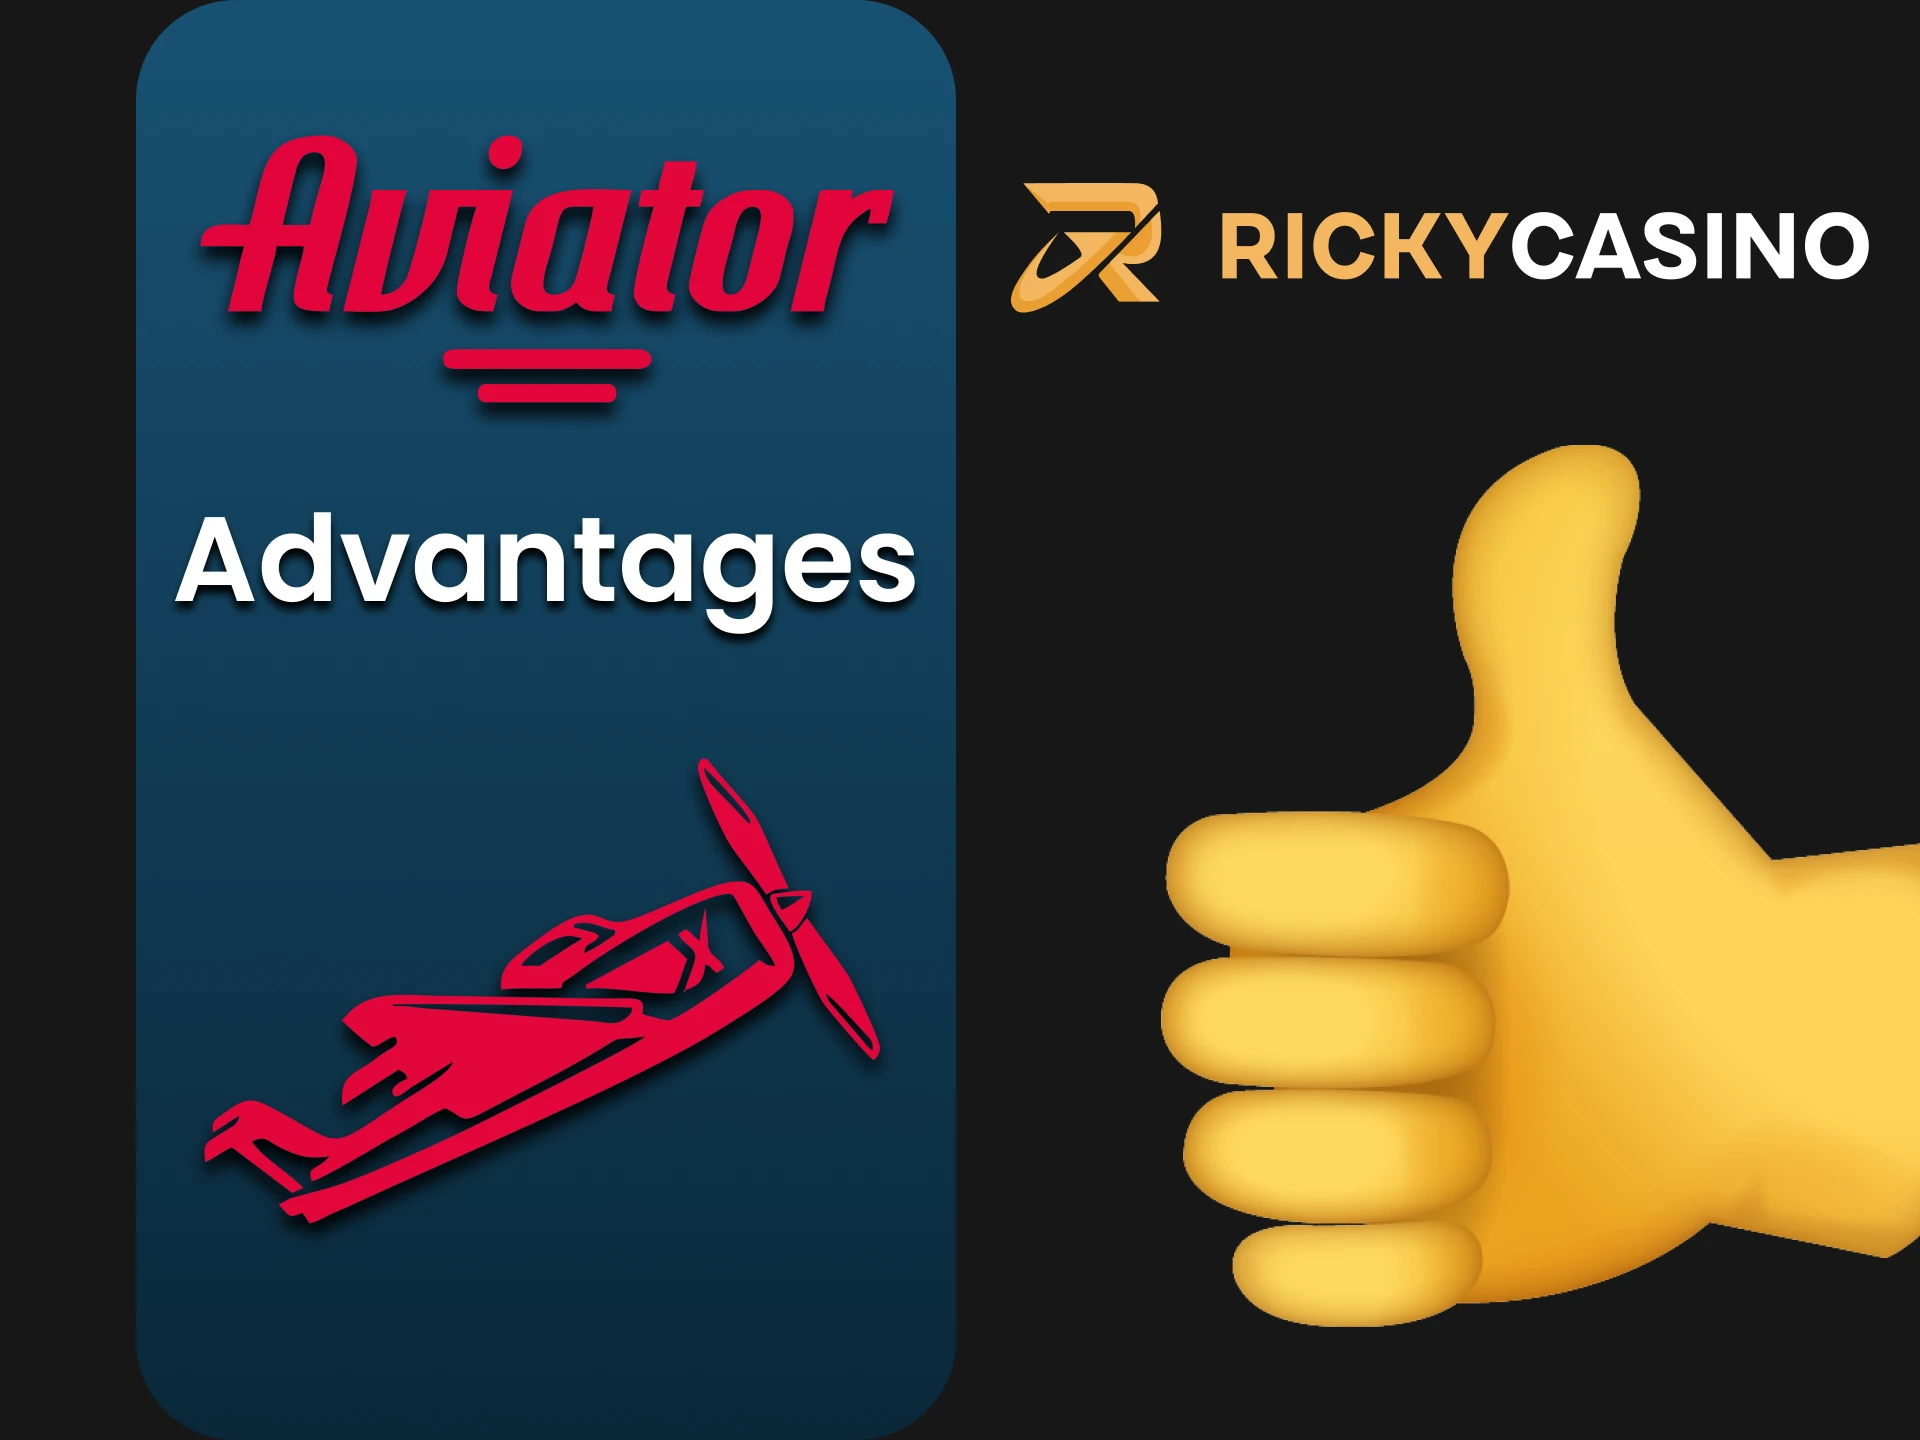 Ricky Casino has many advantages for playing Aviator.